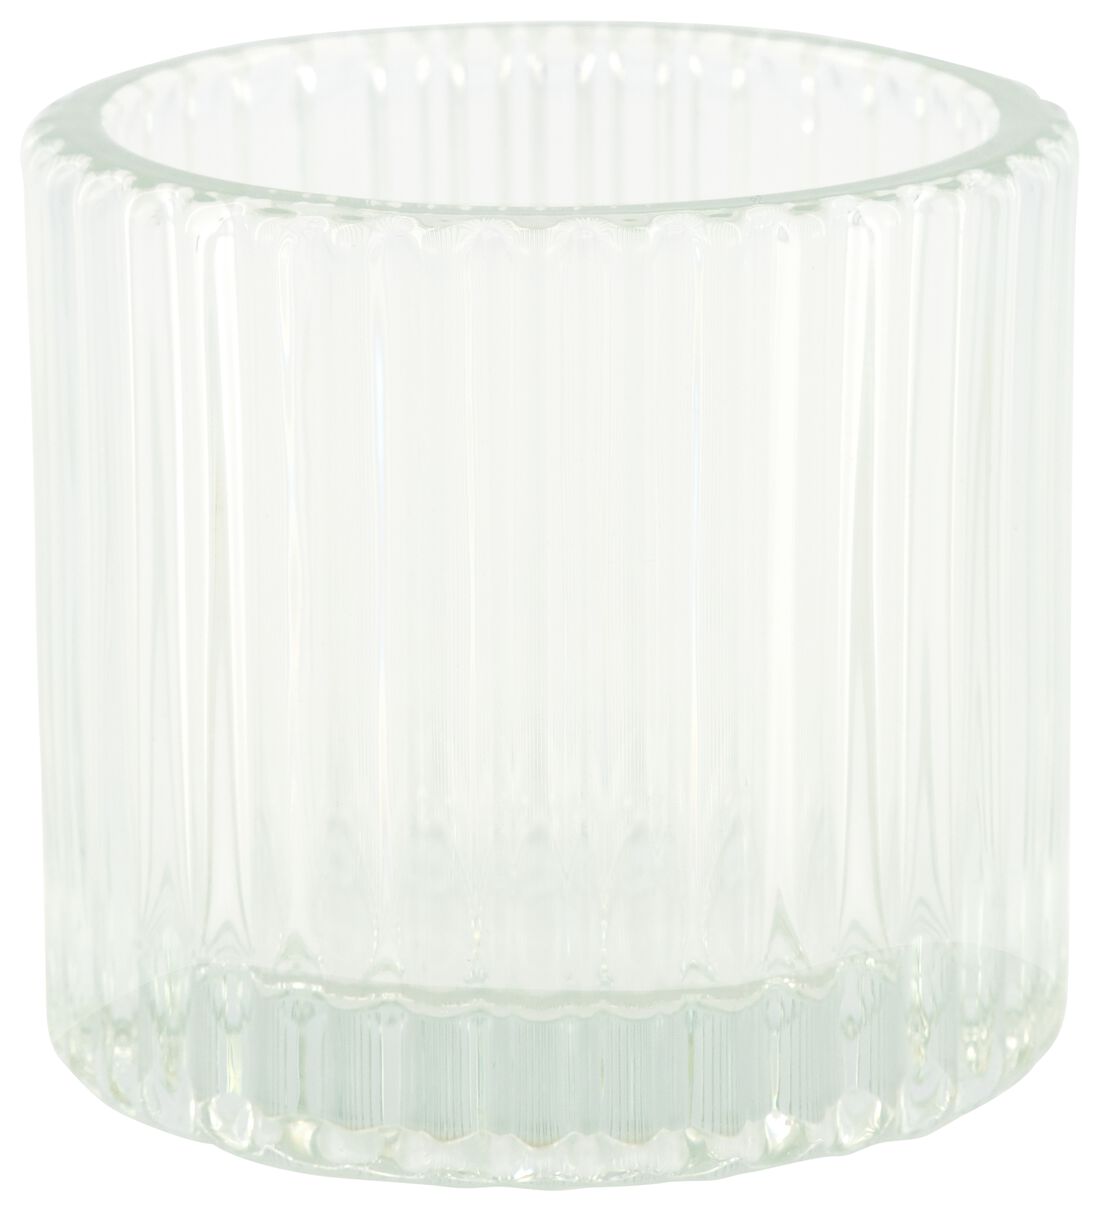 HEMA Sfeerlichthouder Glas Met Ribbels Ø7x6.5 (transparant)